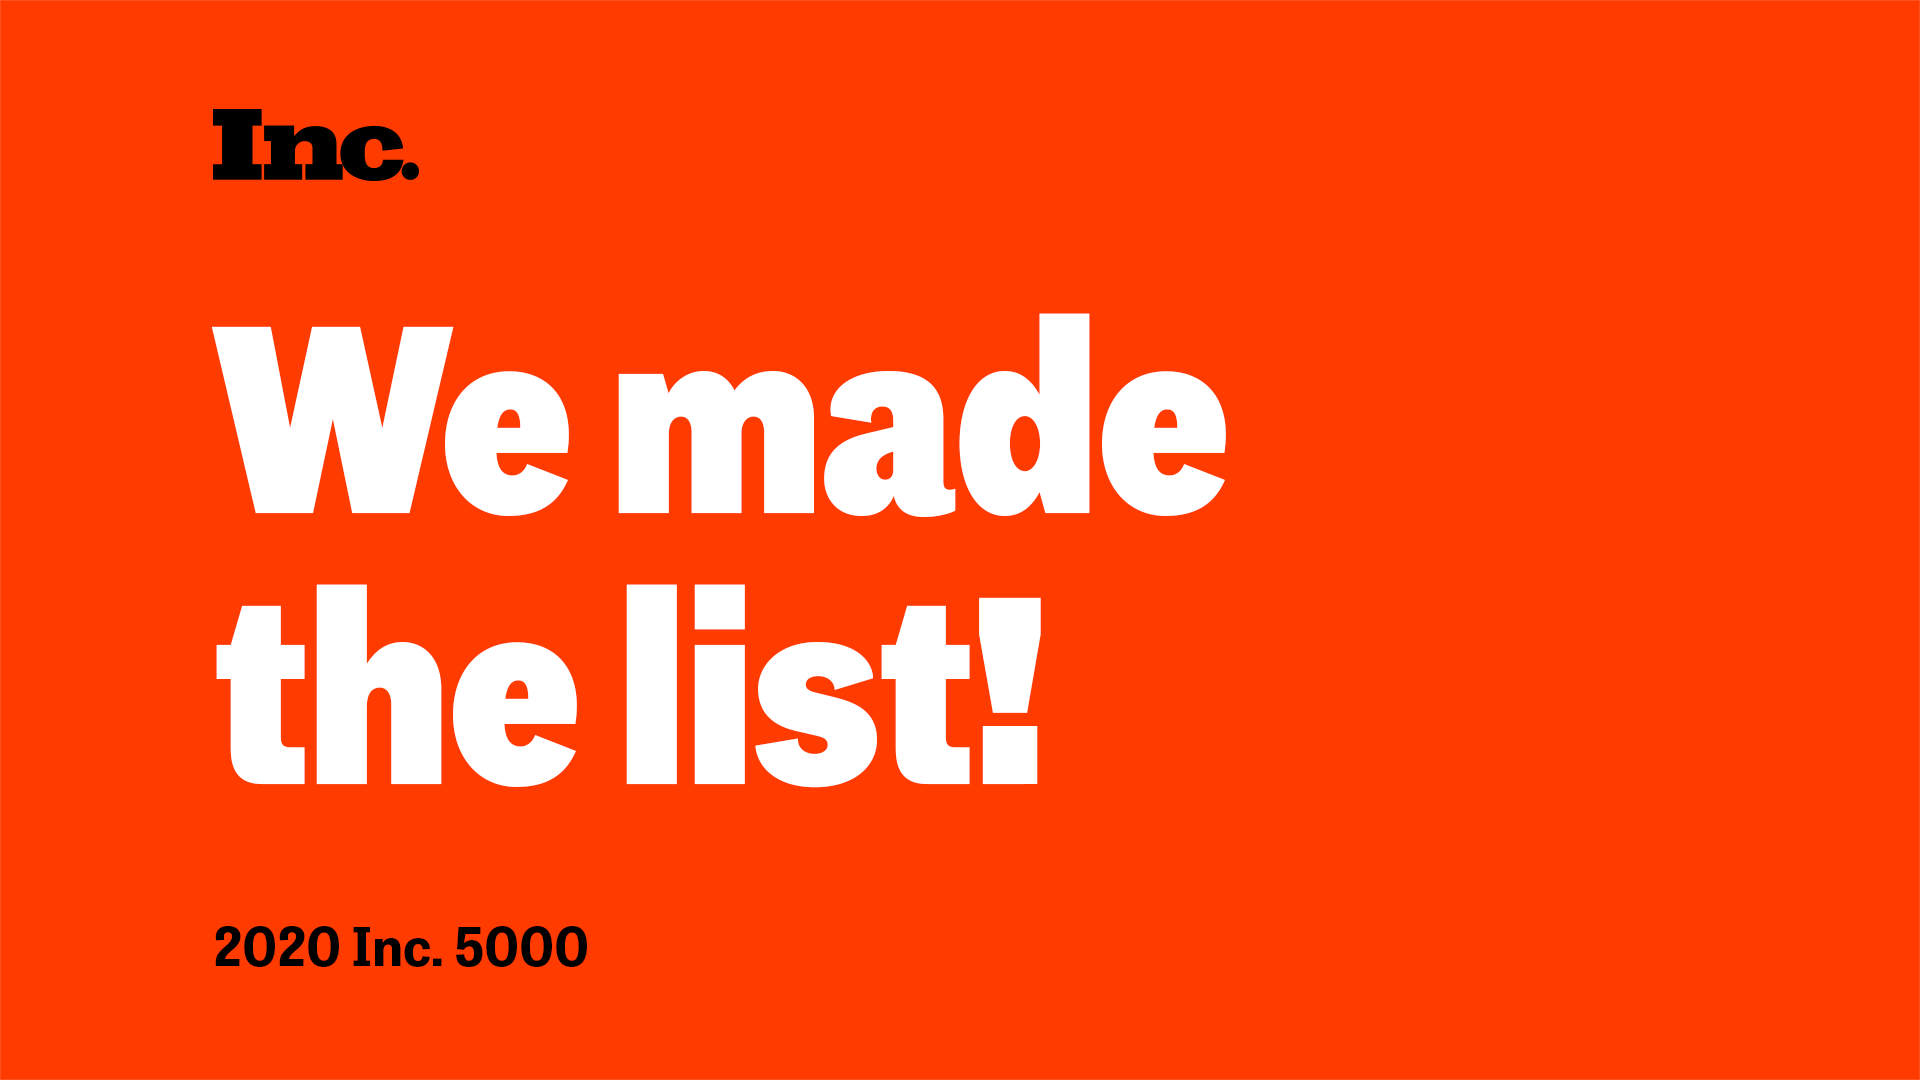 Inc. 500 We made the list!